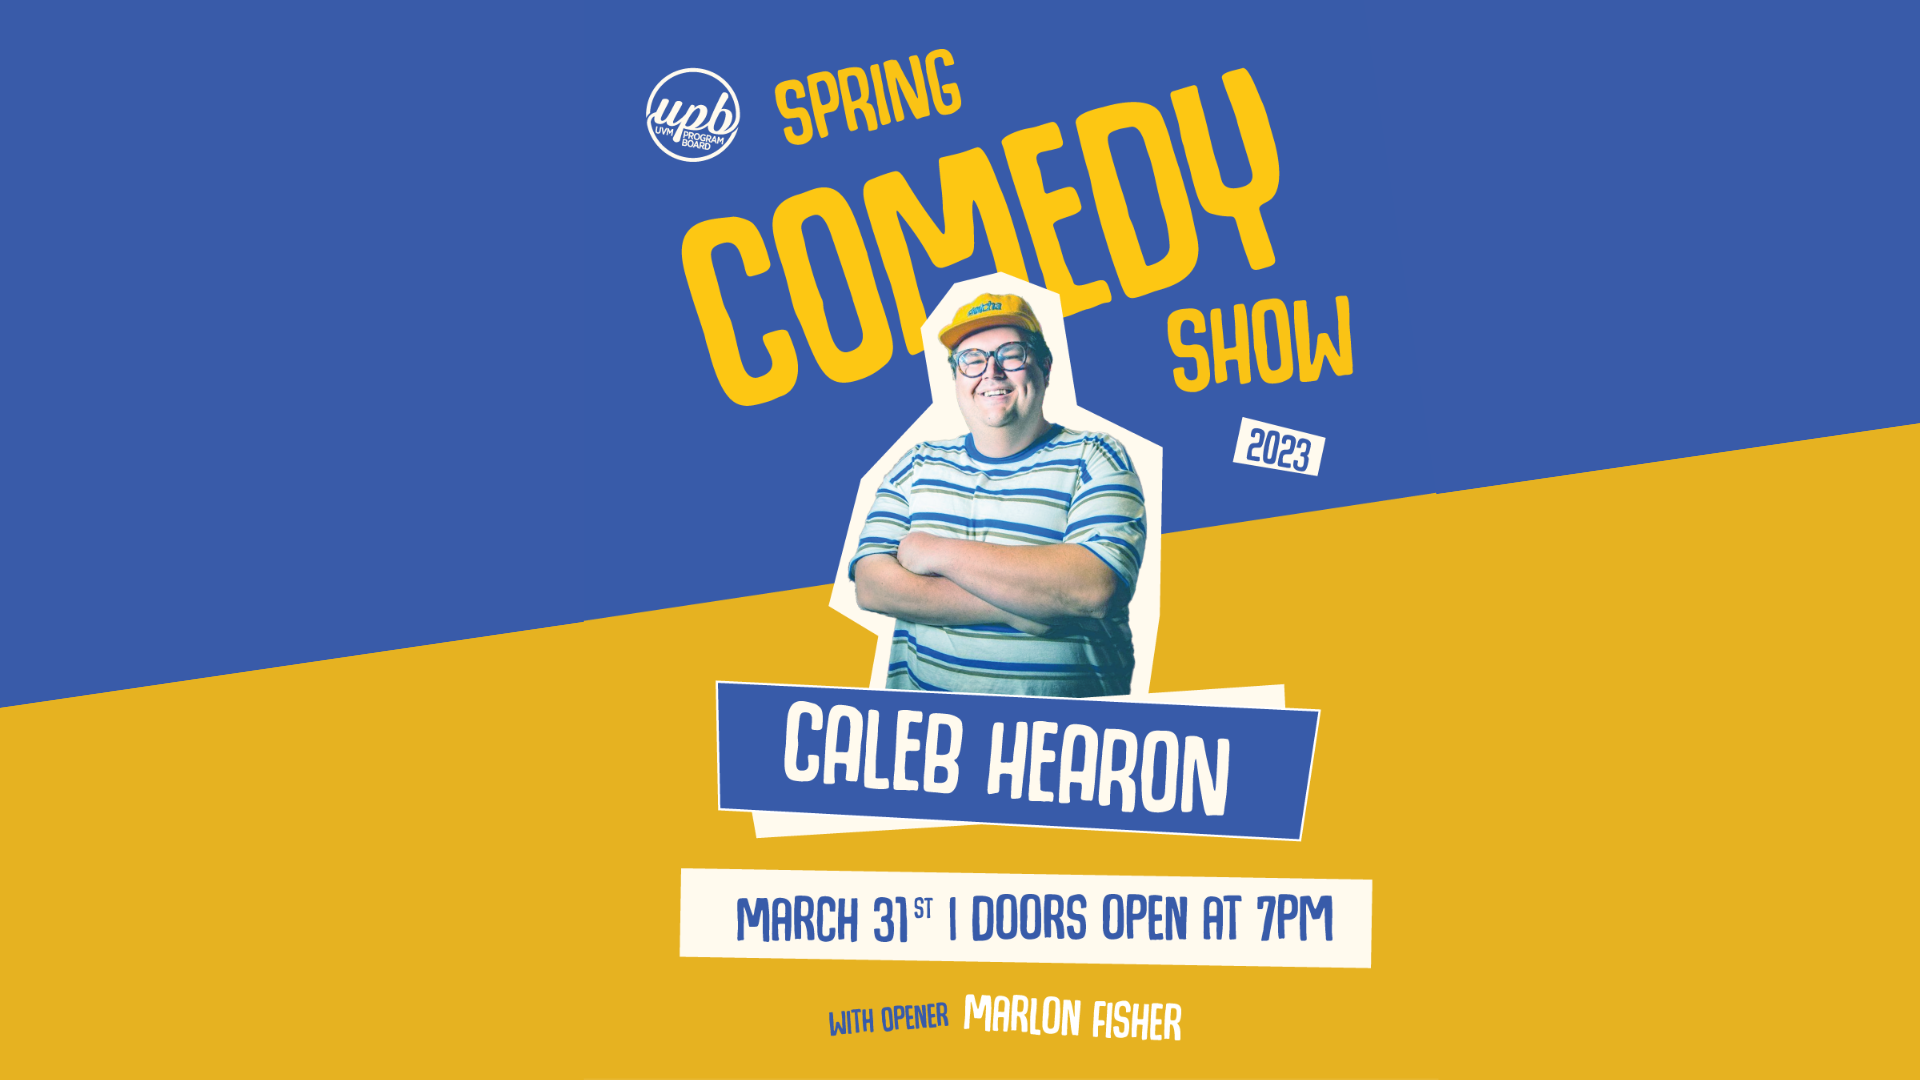 Spring Comedy Show poster